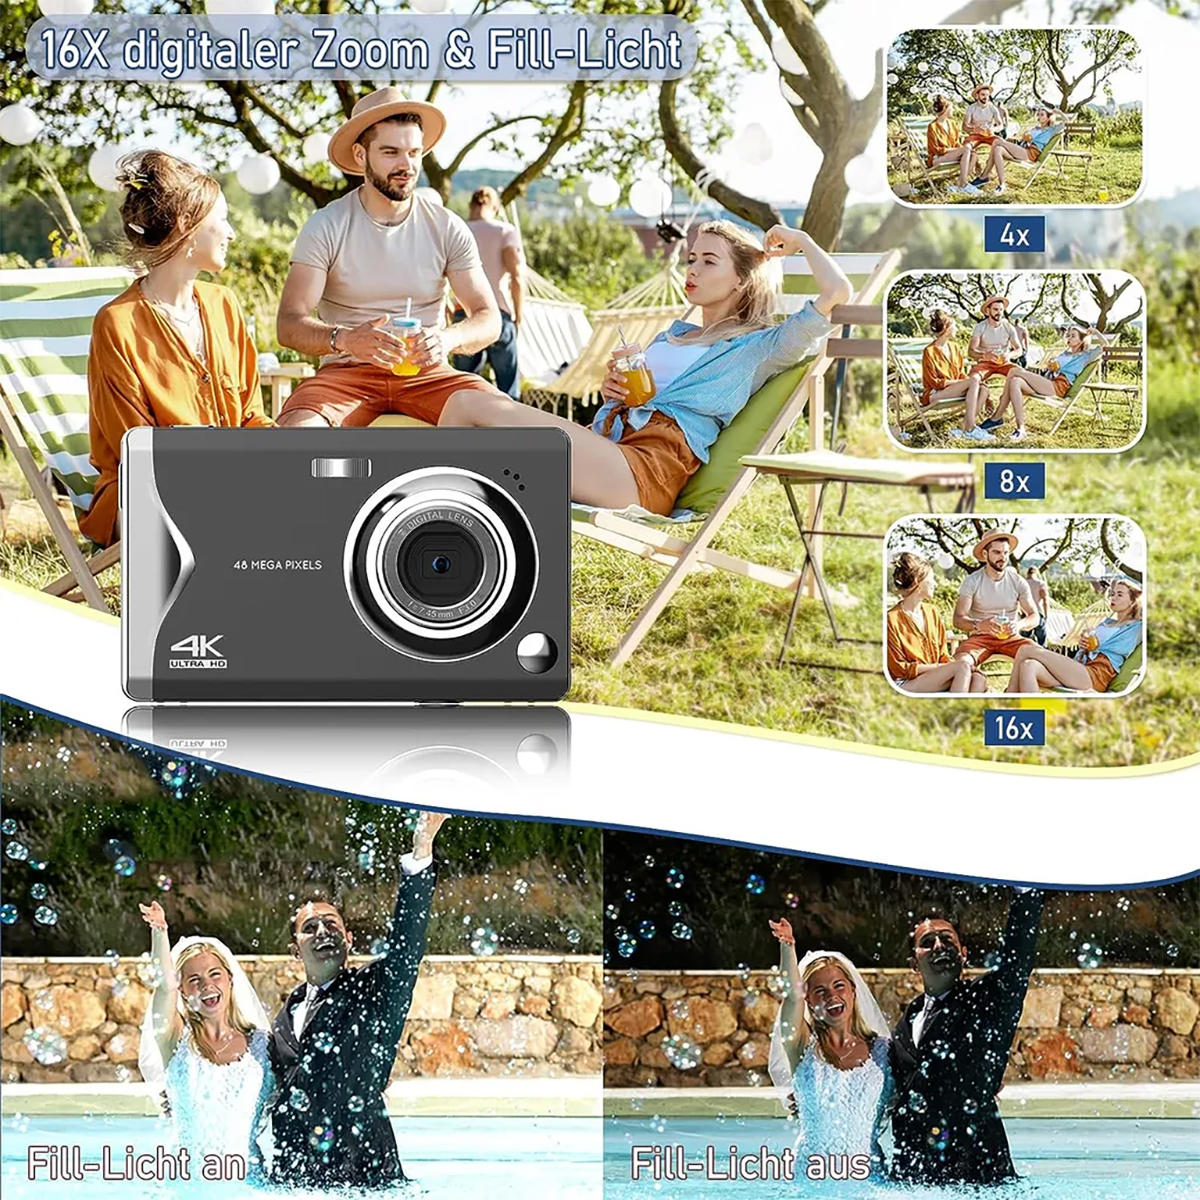 LINGDA 4K HD 48MP Fotokamera,32GB Schwarz Digitalkamera SD-Karte, Digitalzoom 16-facher